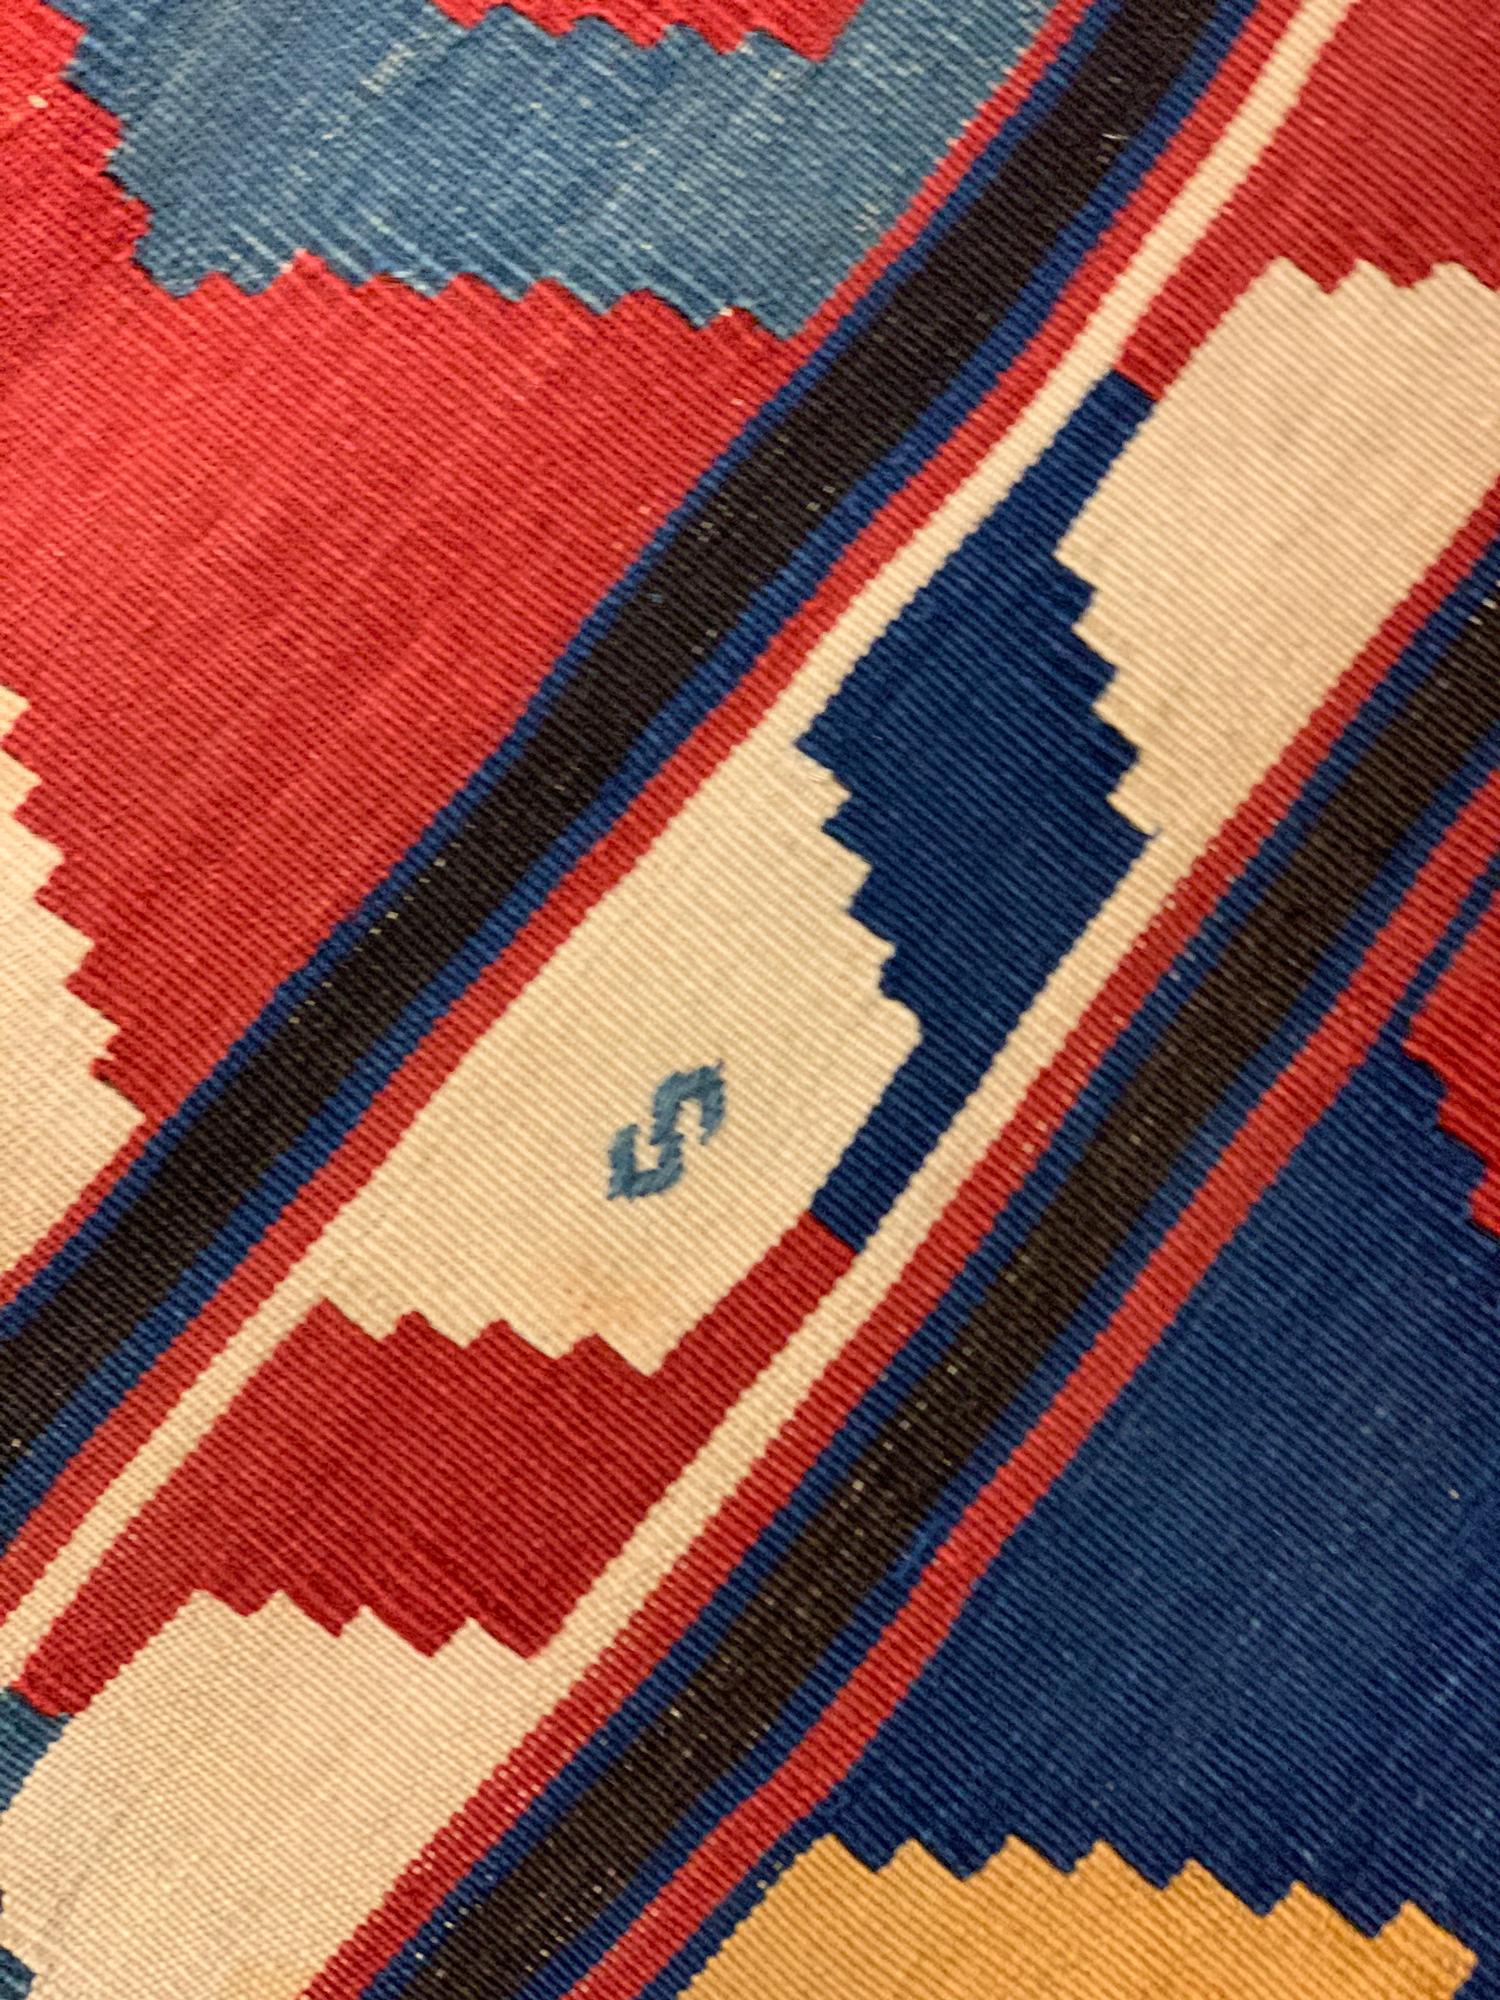 Organic Material Oriental Rug Kilim Traditional Carpet Antique Rugs, Caucasian Kilim Rug For Sale